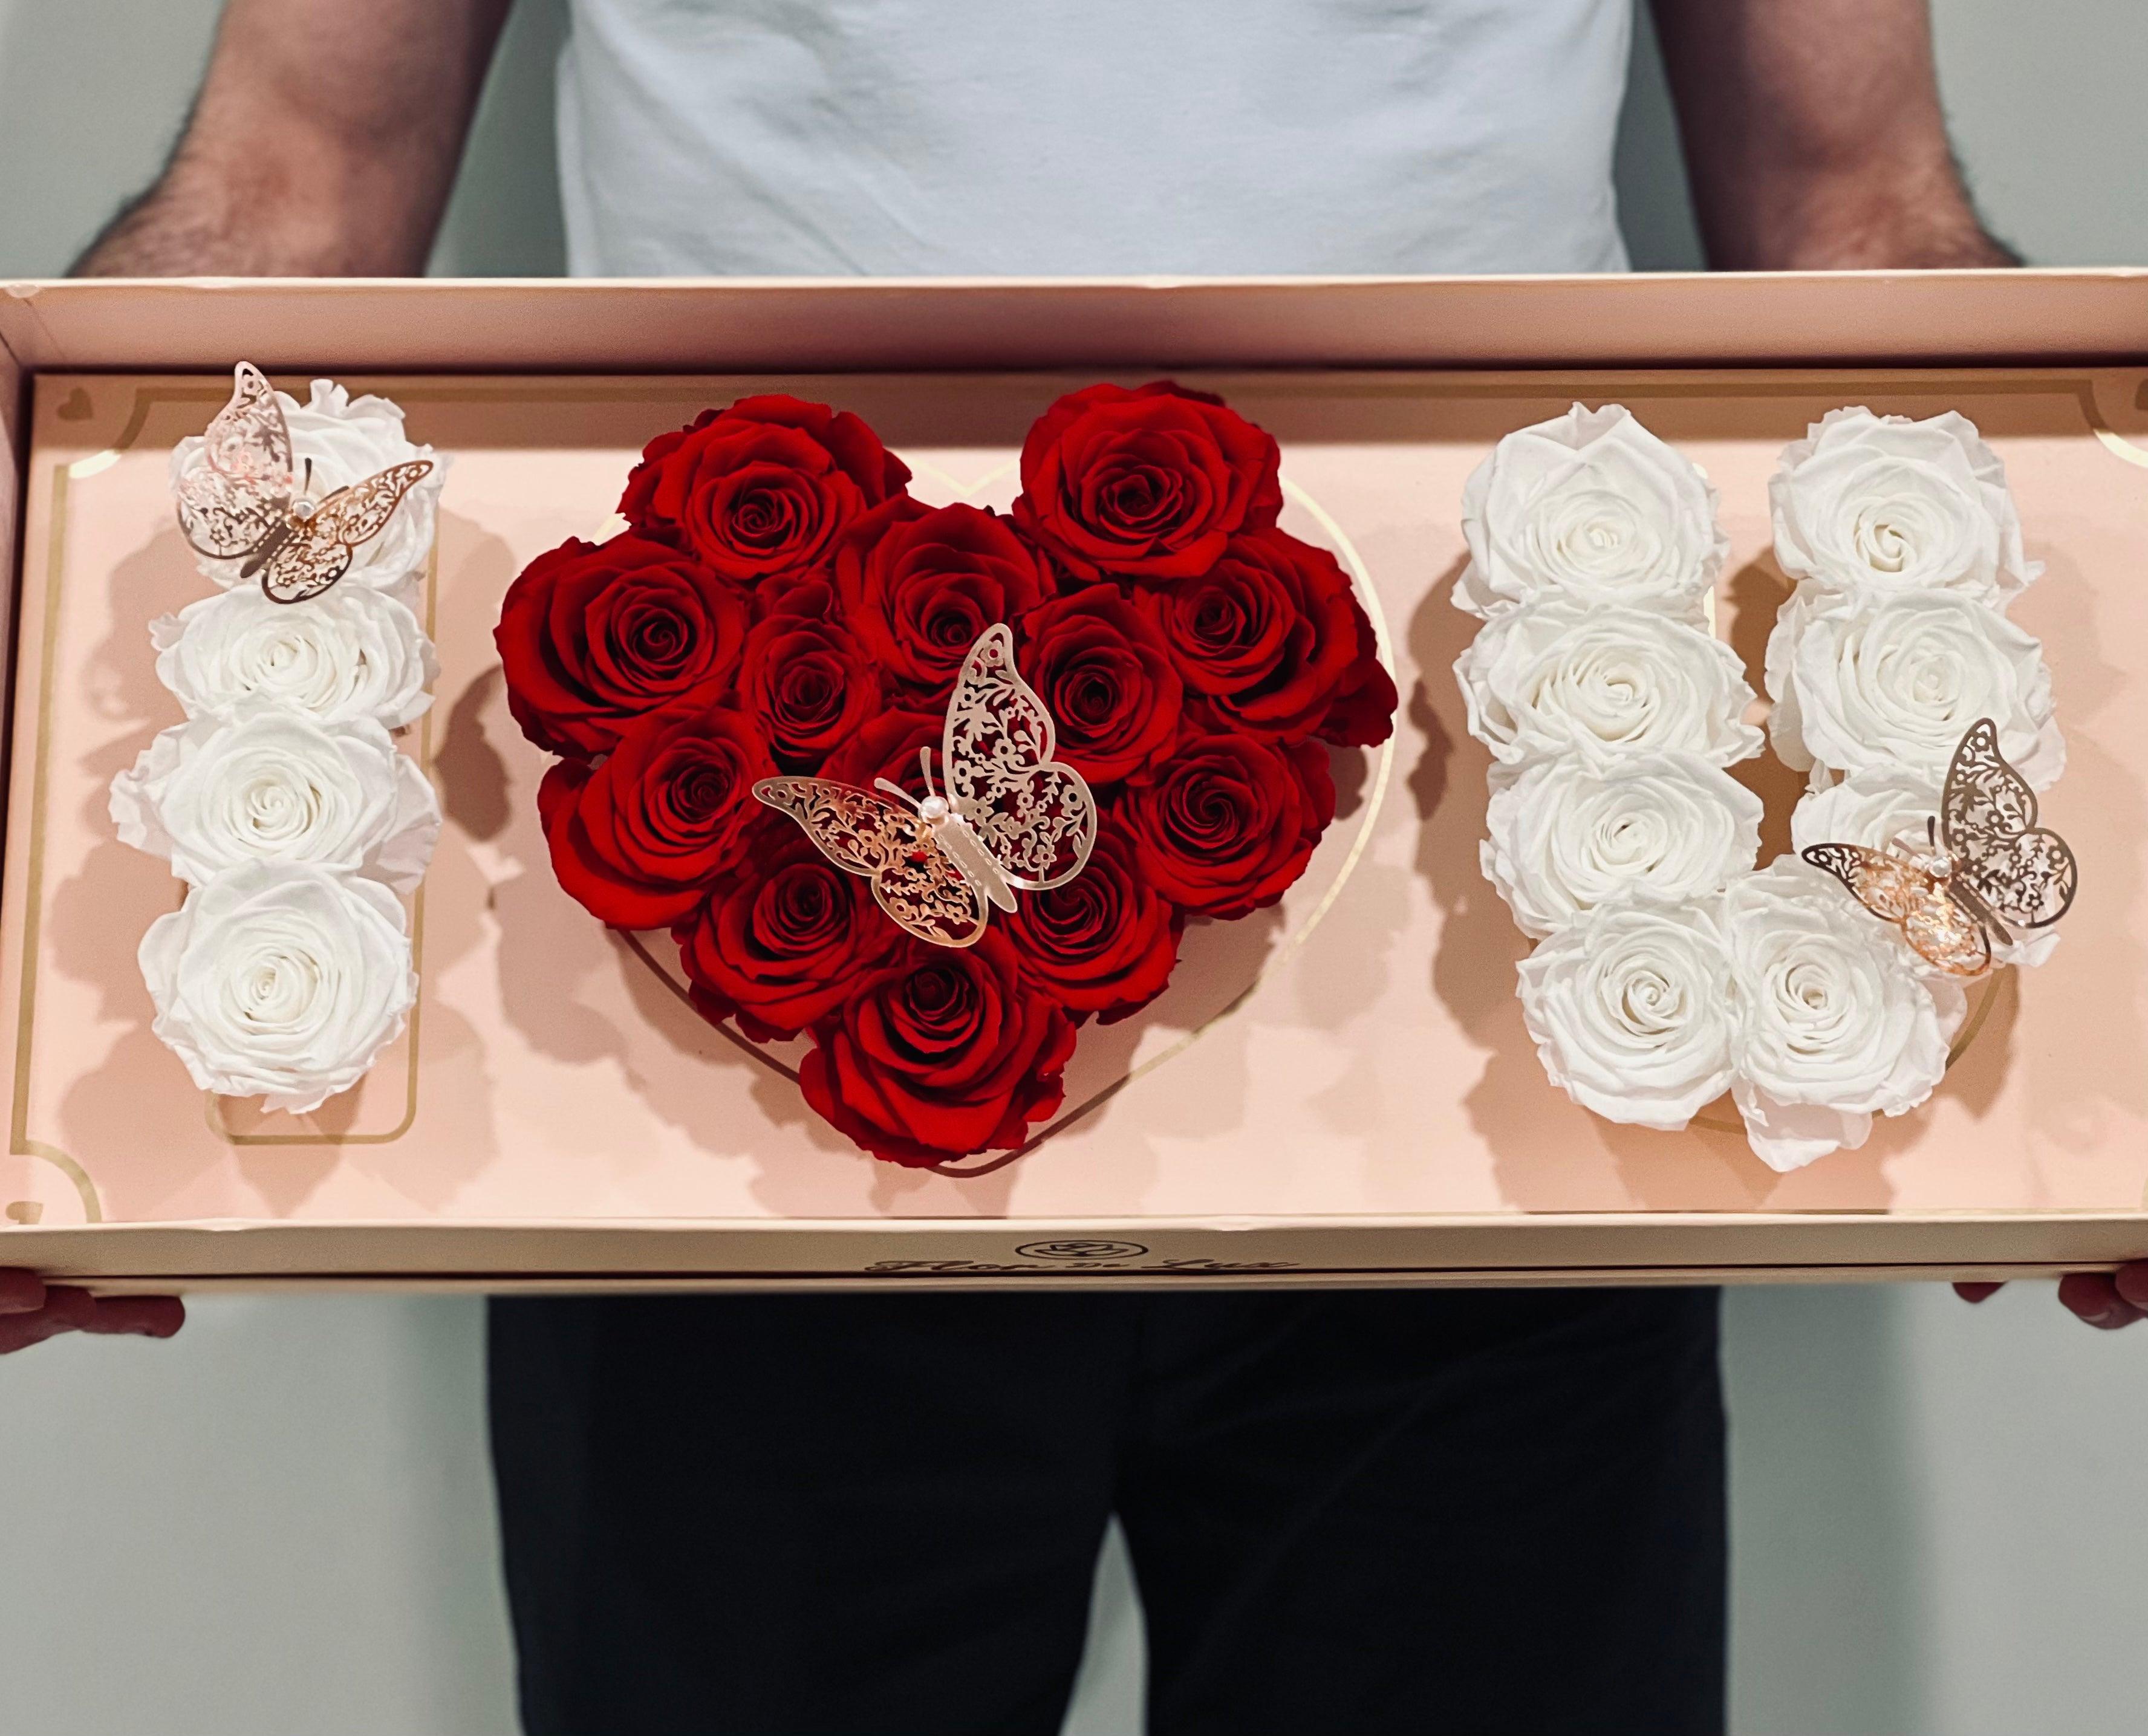 I Love You Box - Preserved Roses - Flor De Lux